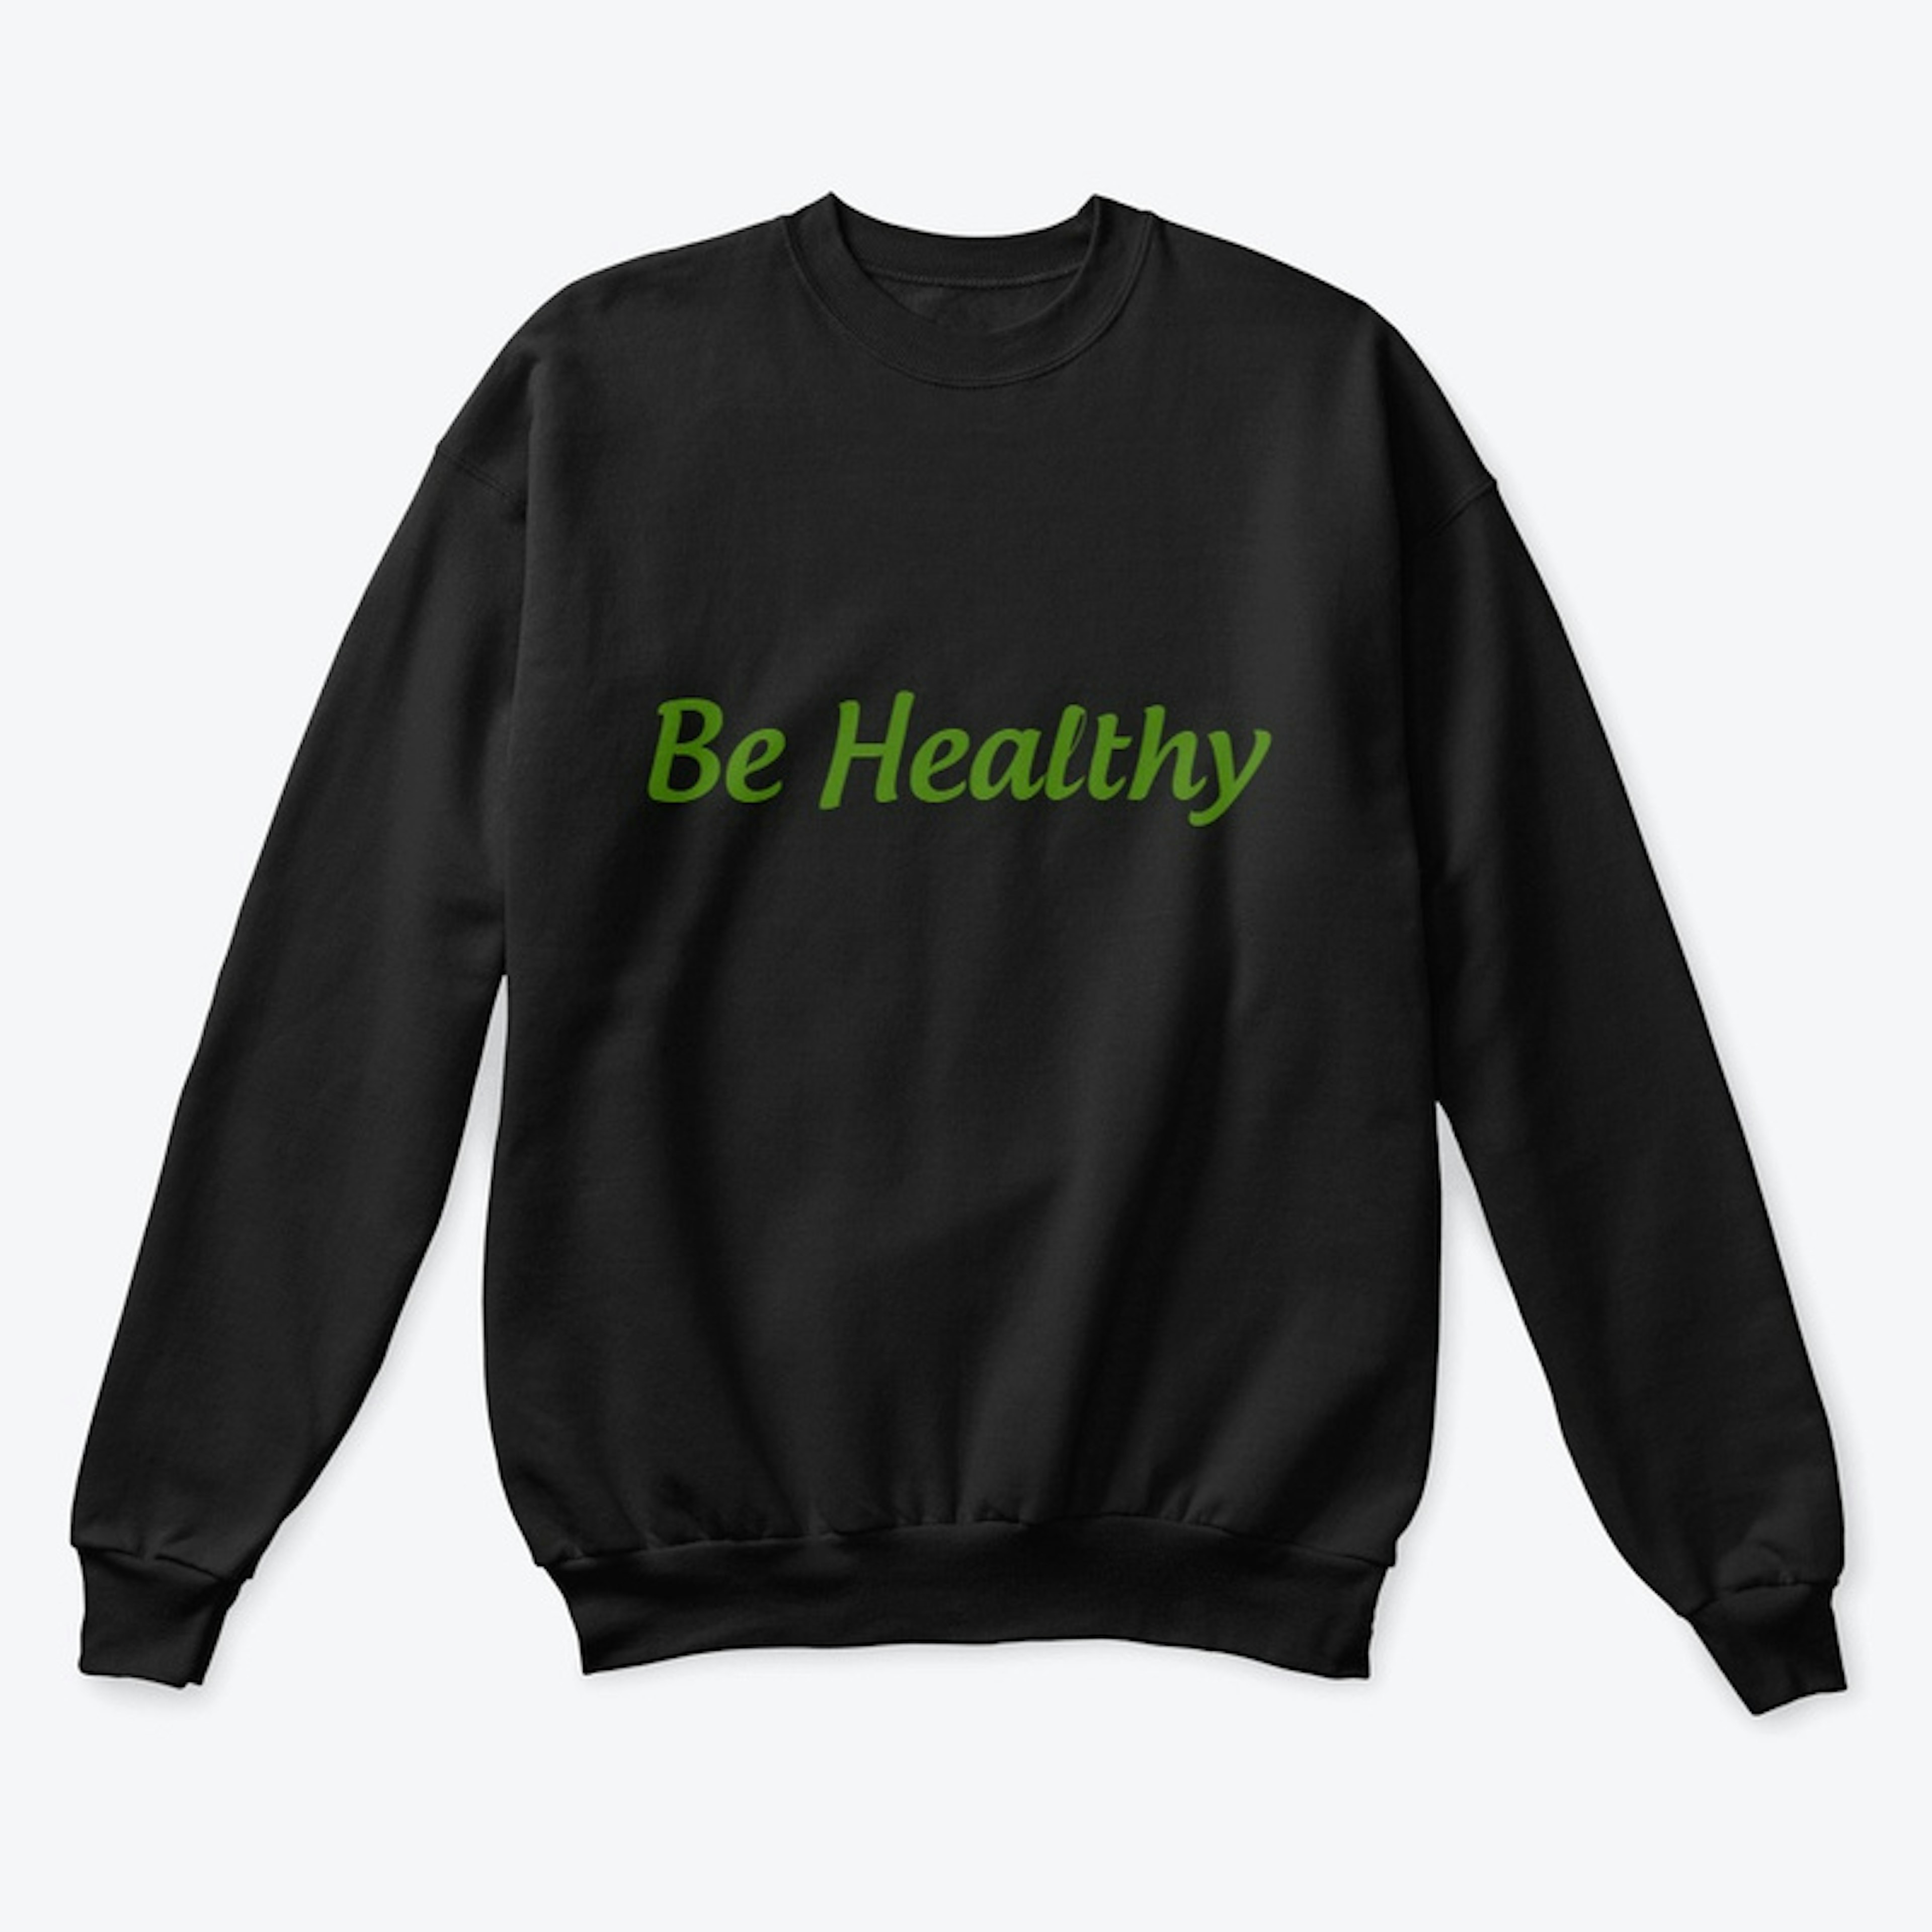 "Be Healthy" pharmaquiz